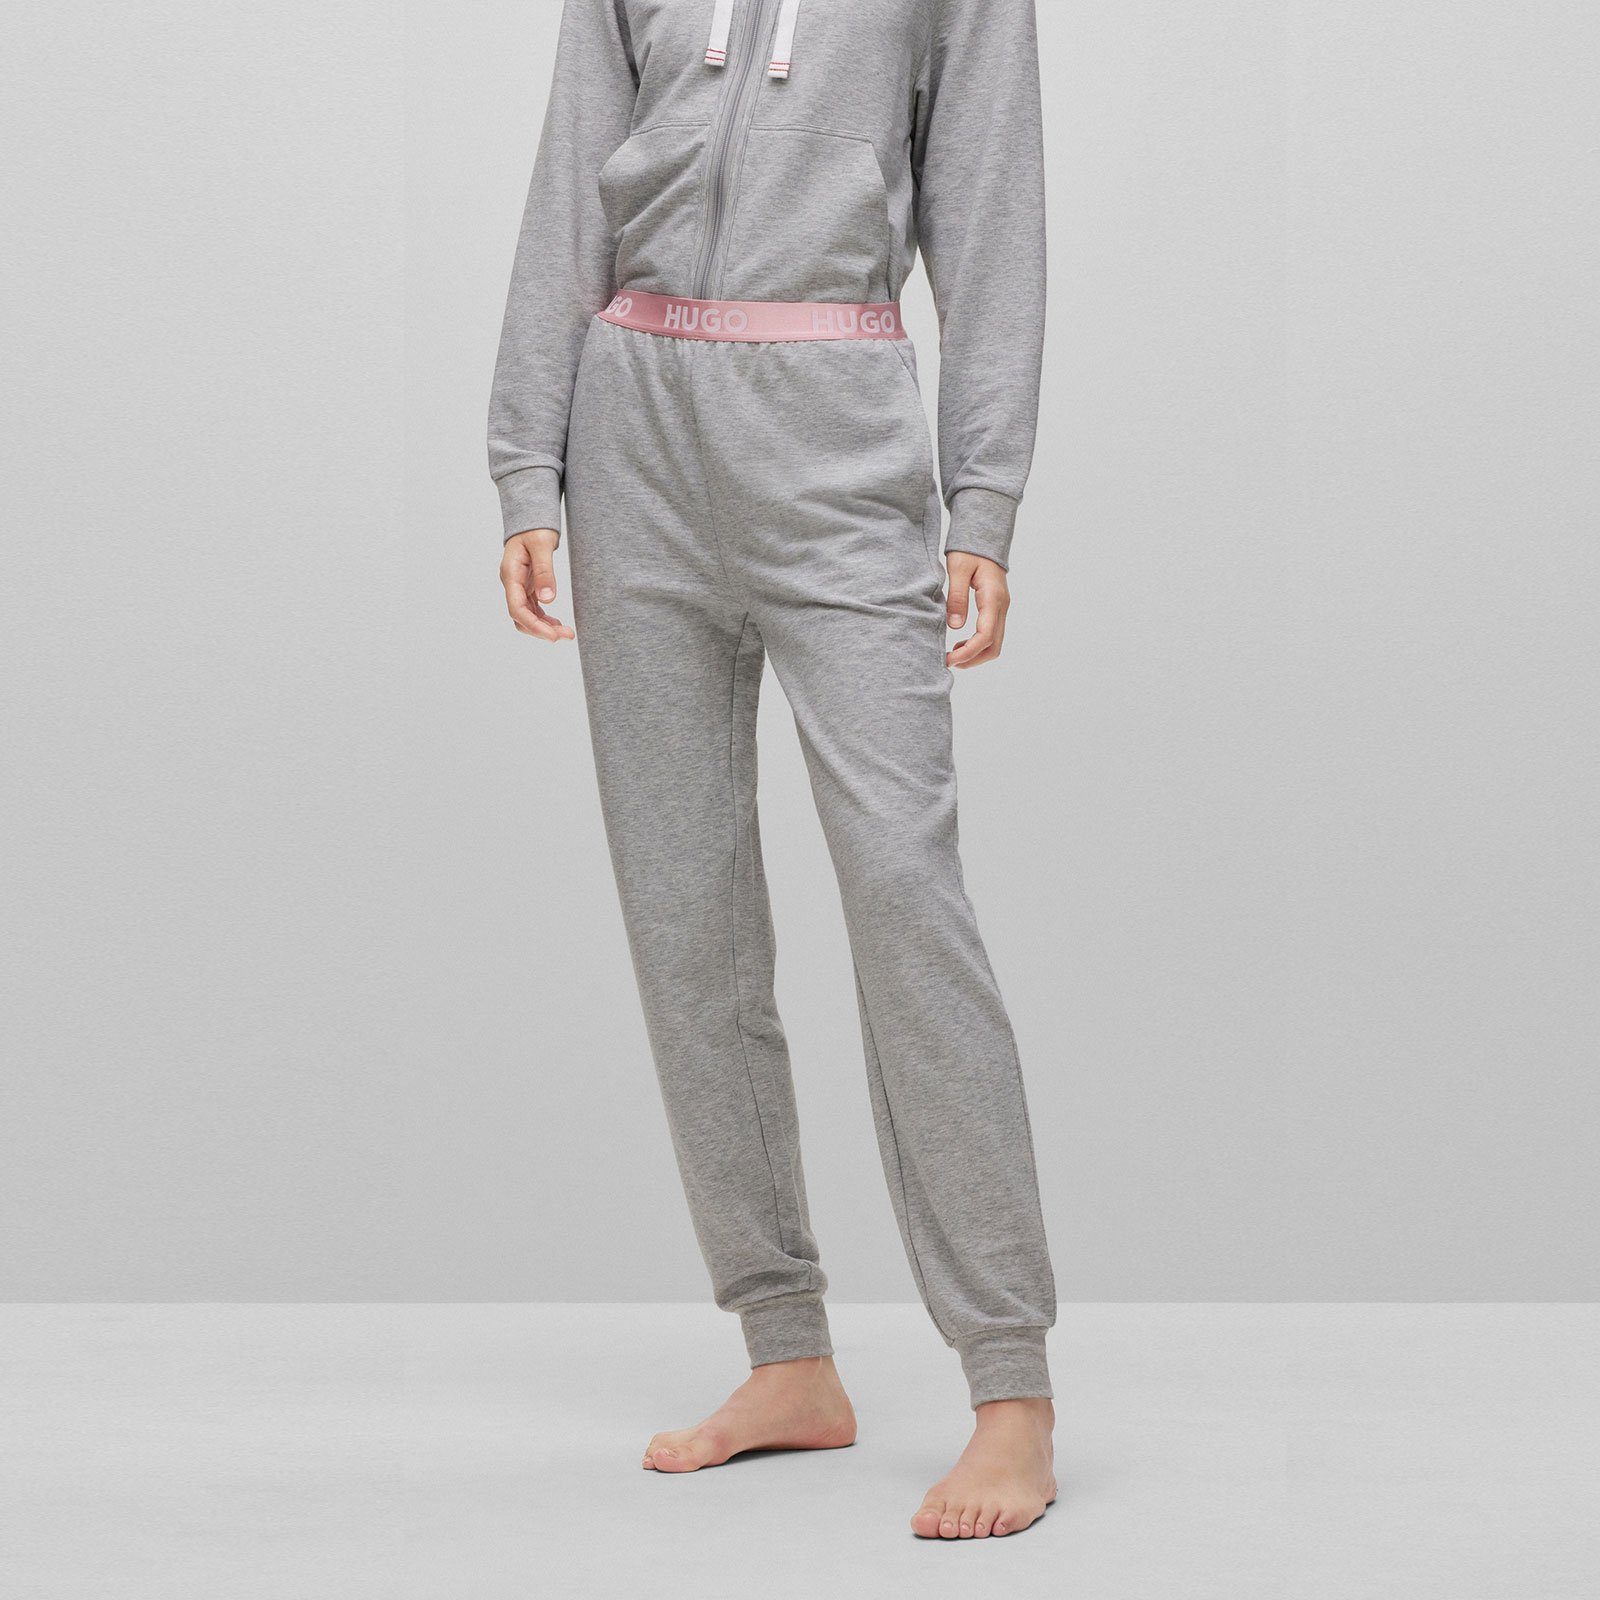 sichtbarem Sporty grey Jogginghose mit Logo Pants Bund mit HUGO 035 Marken-Logos